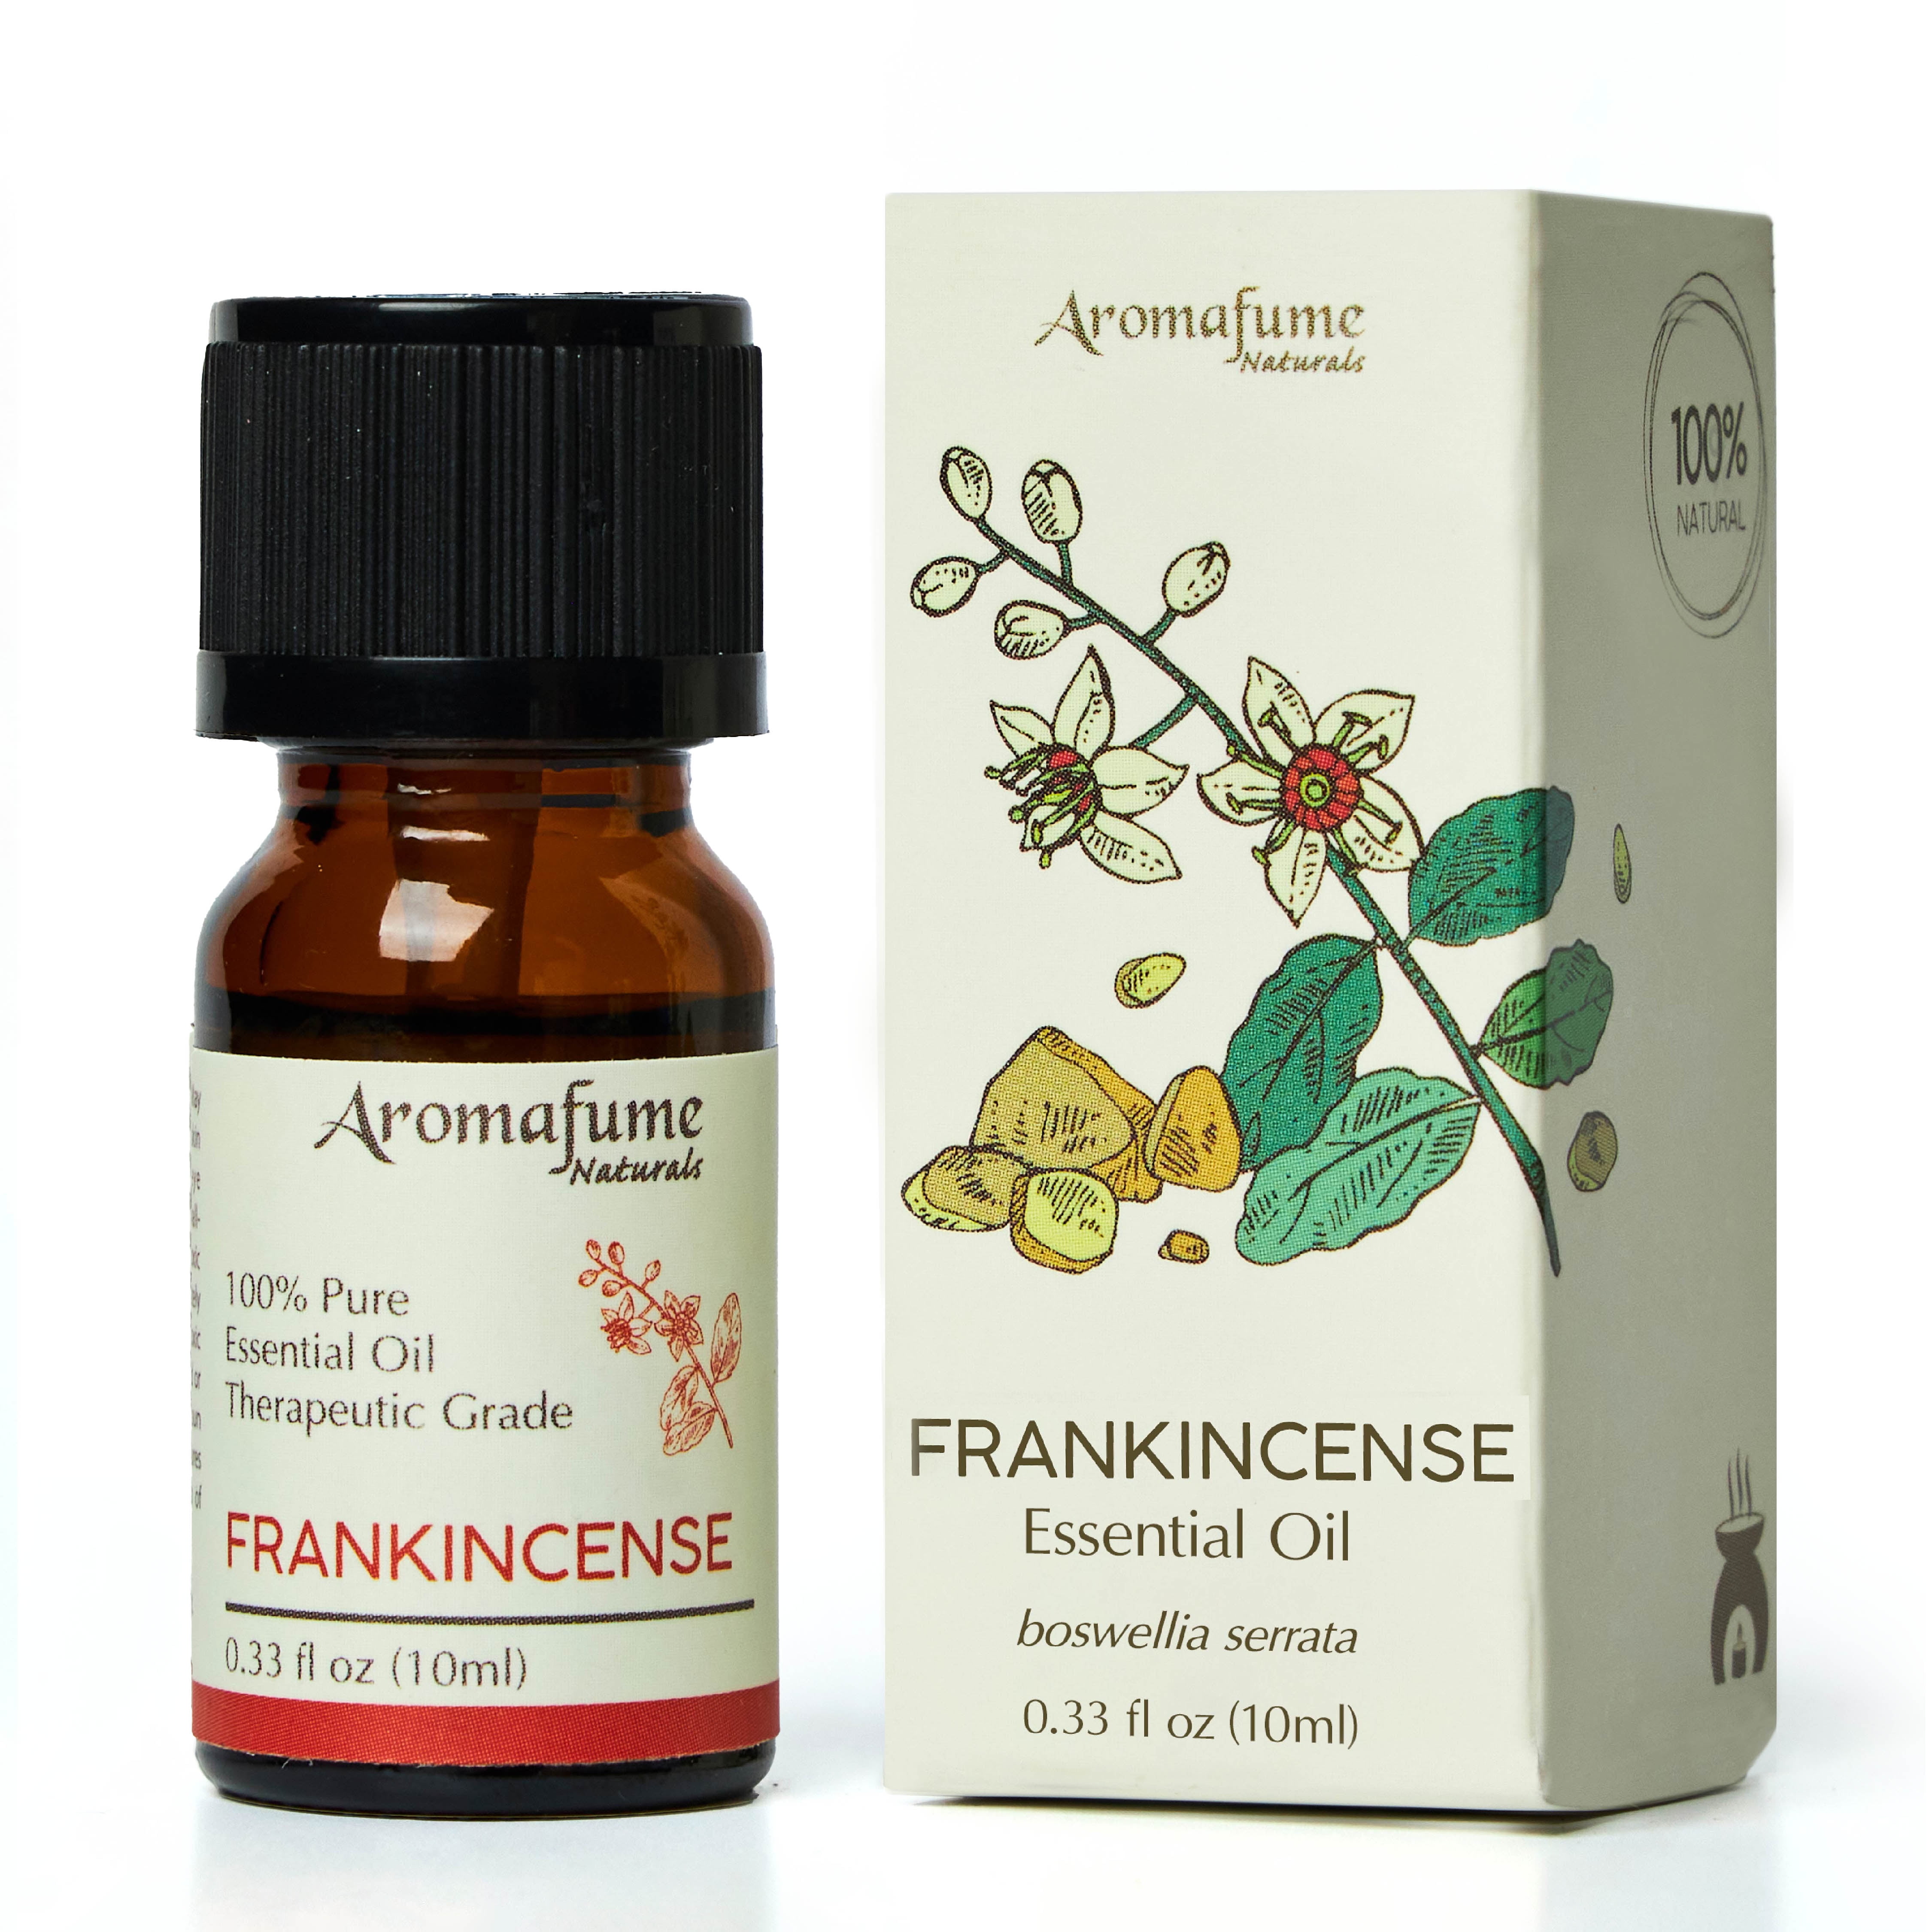 GuruNanda's Frankincense Essential Oil, 100% Pure, 15 ML, 1 Pk